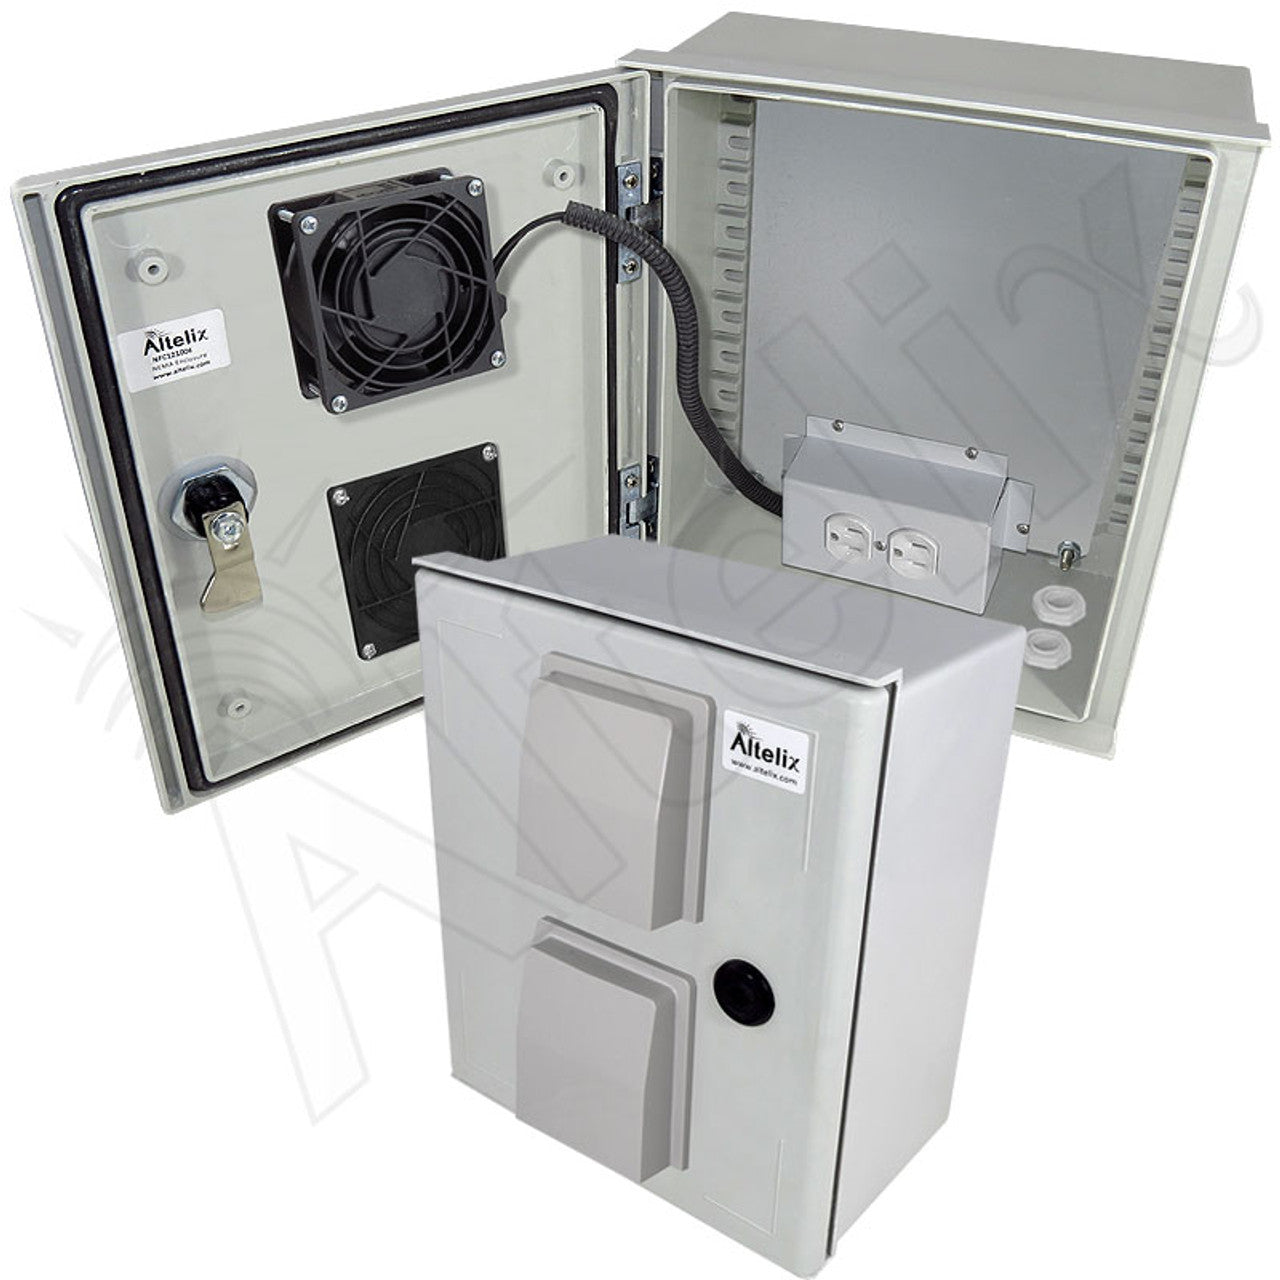 Altelix Vented Fiberglass Weatherproof NEMA Enclosure with Cooling Fan & 120 VAC Outlets